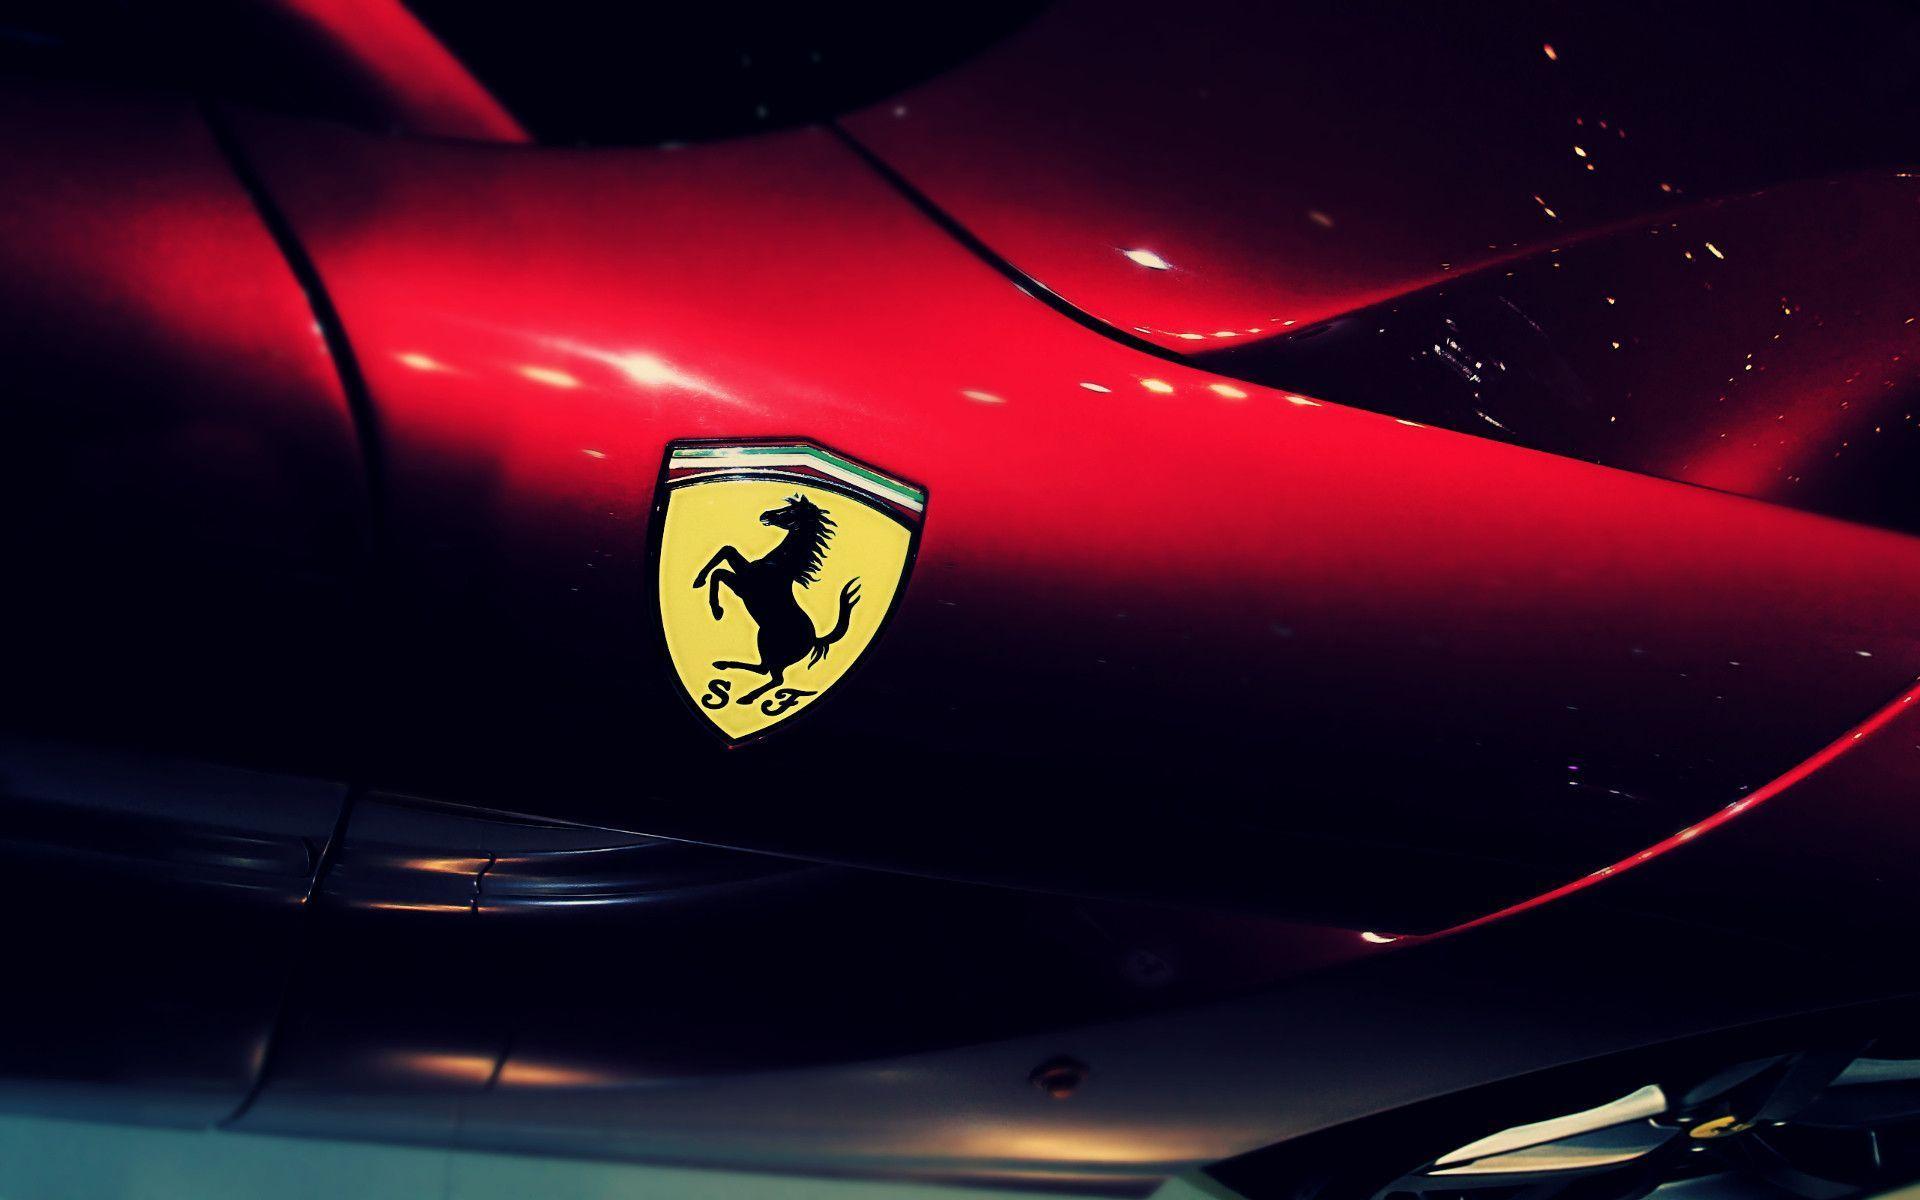 Ferrari Wallpaper Full HD. Vehicles Wallpaper. Cars